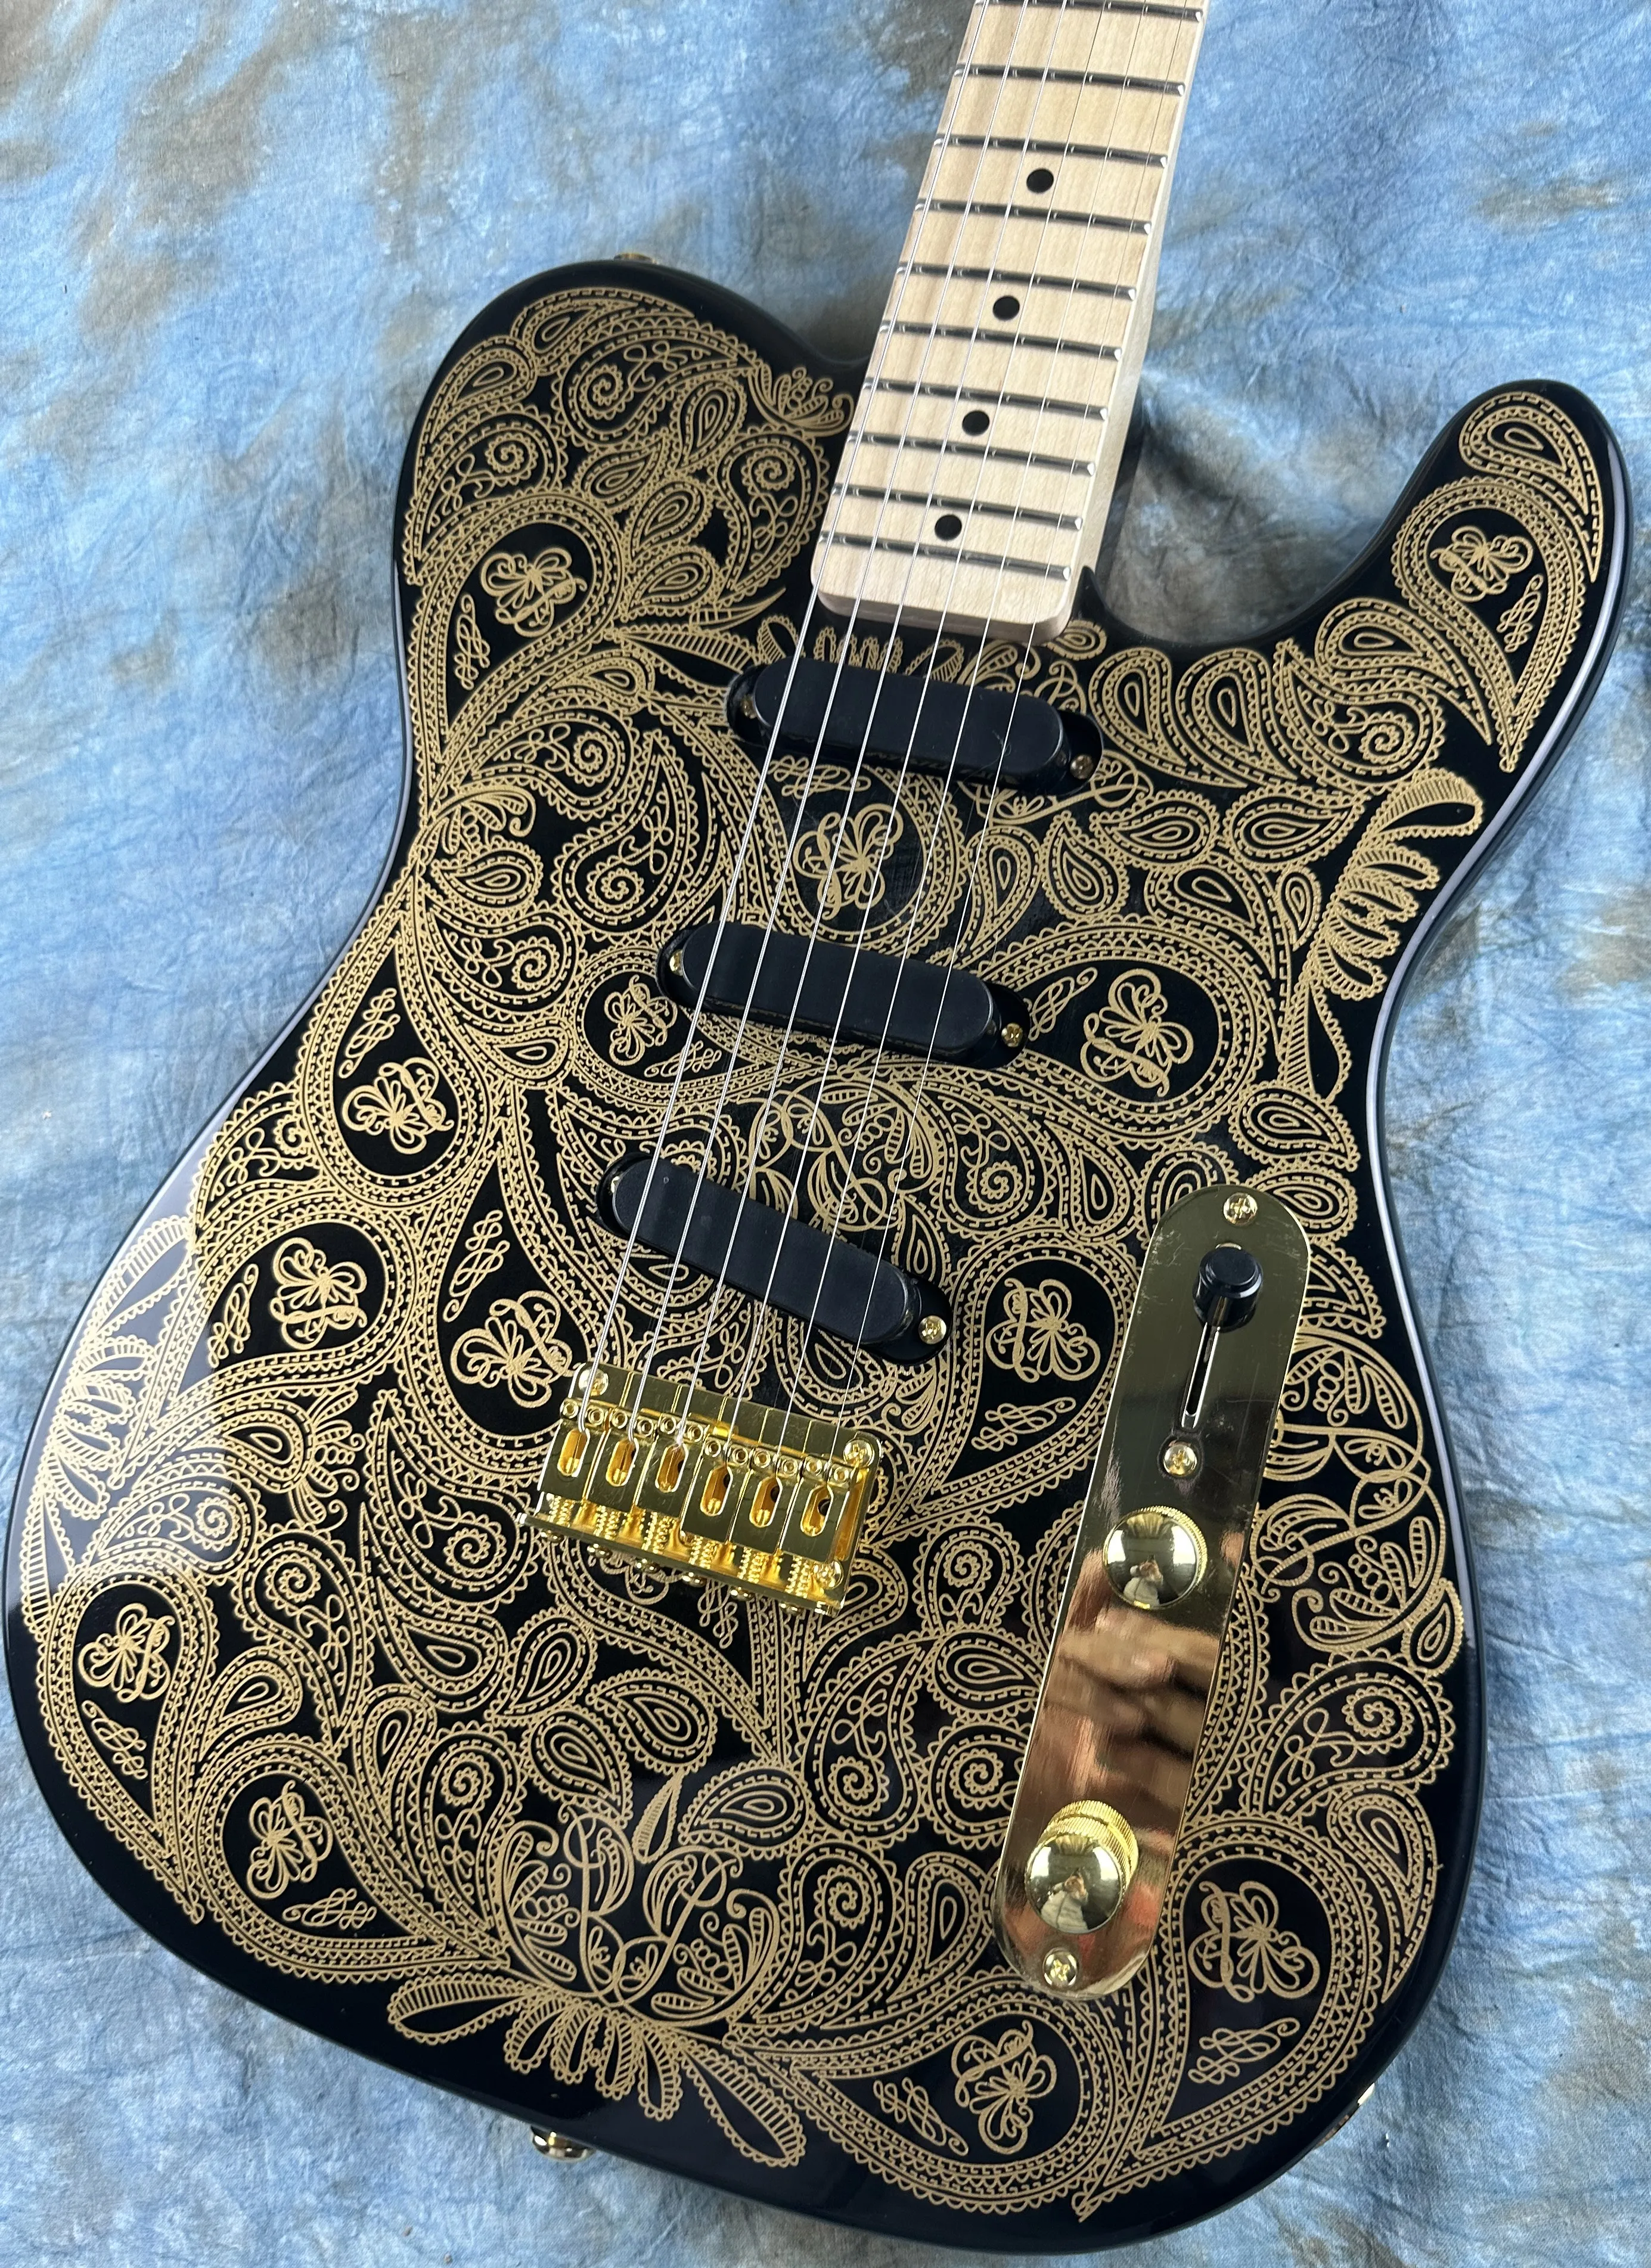 TAULAI Electric Guitar, Black and Gold Accessories, Quick Frakt ingår